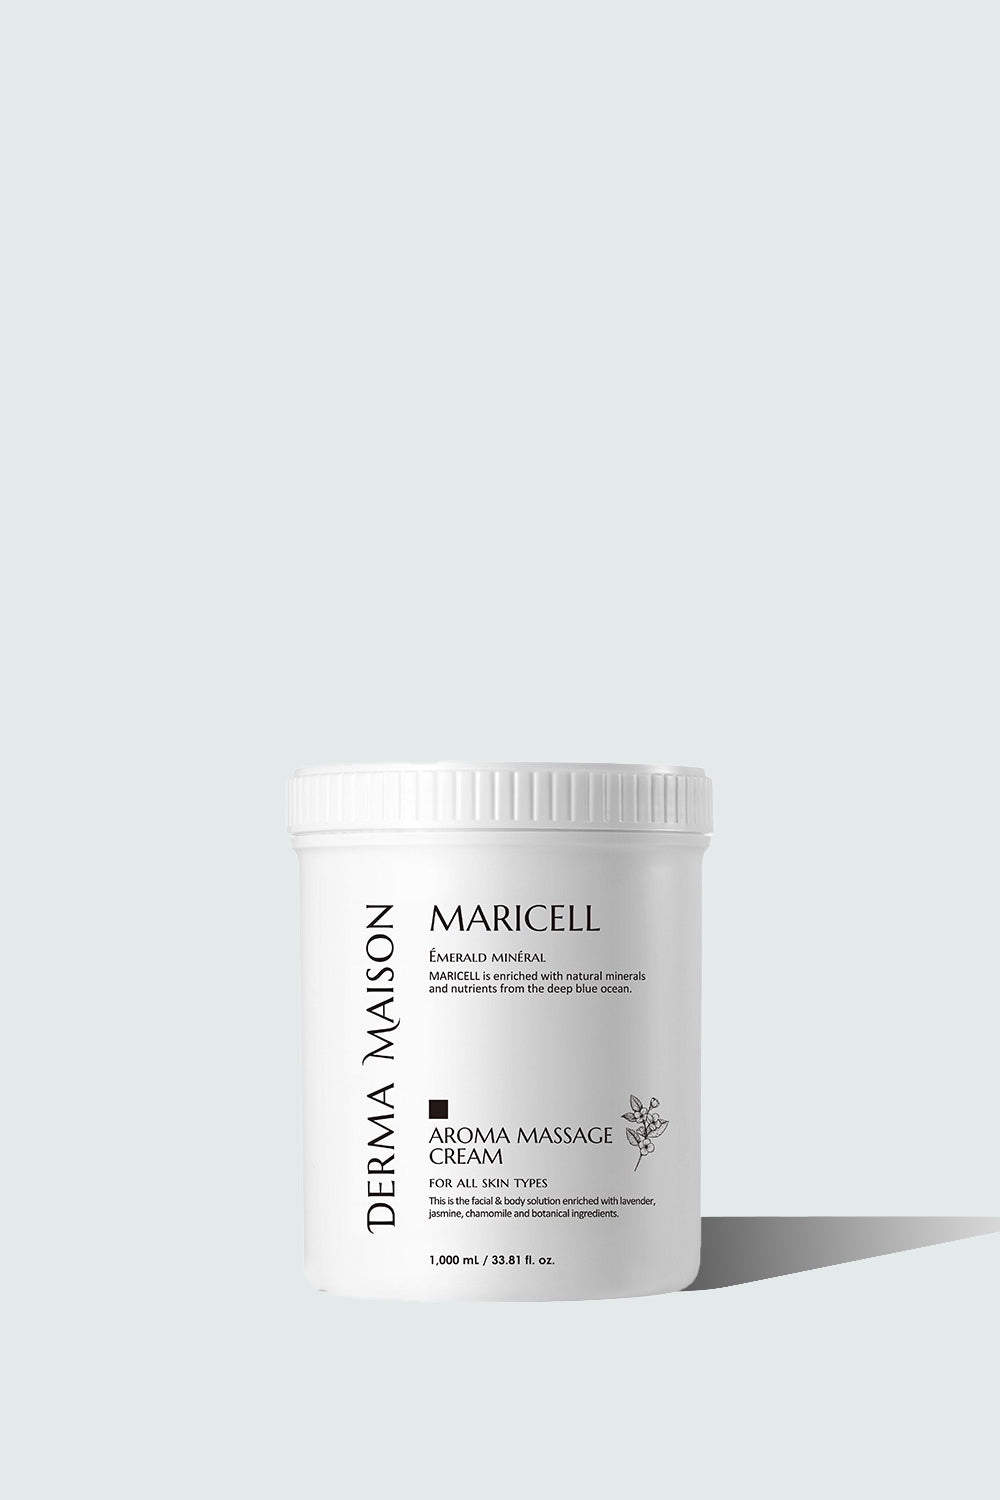 Maricell Aroma Massage Cream - 1,000ml DERMA MAISON